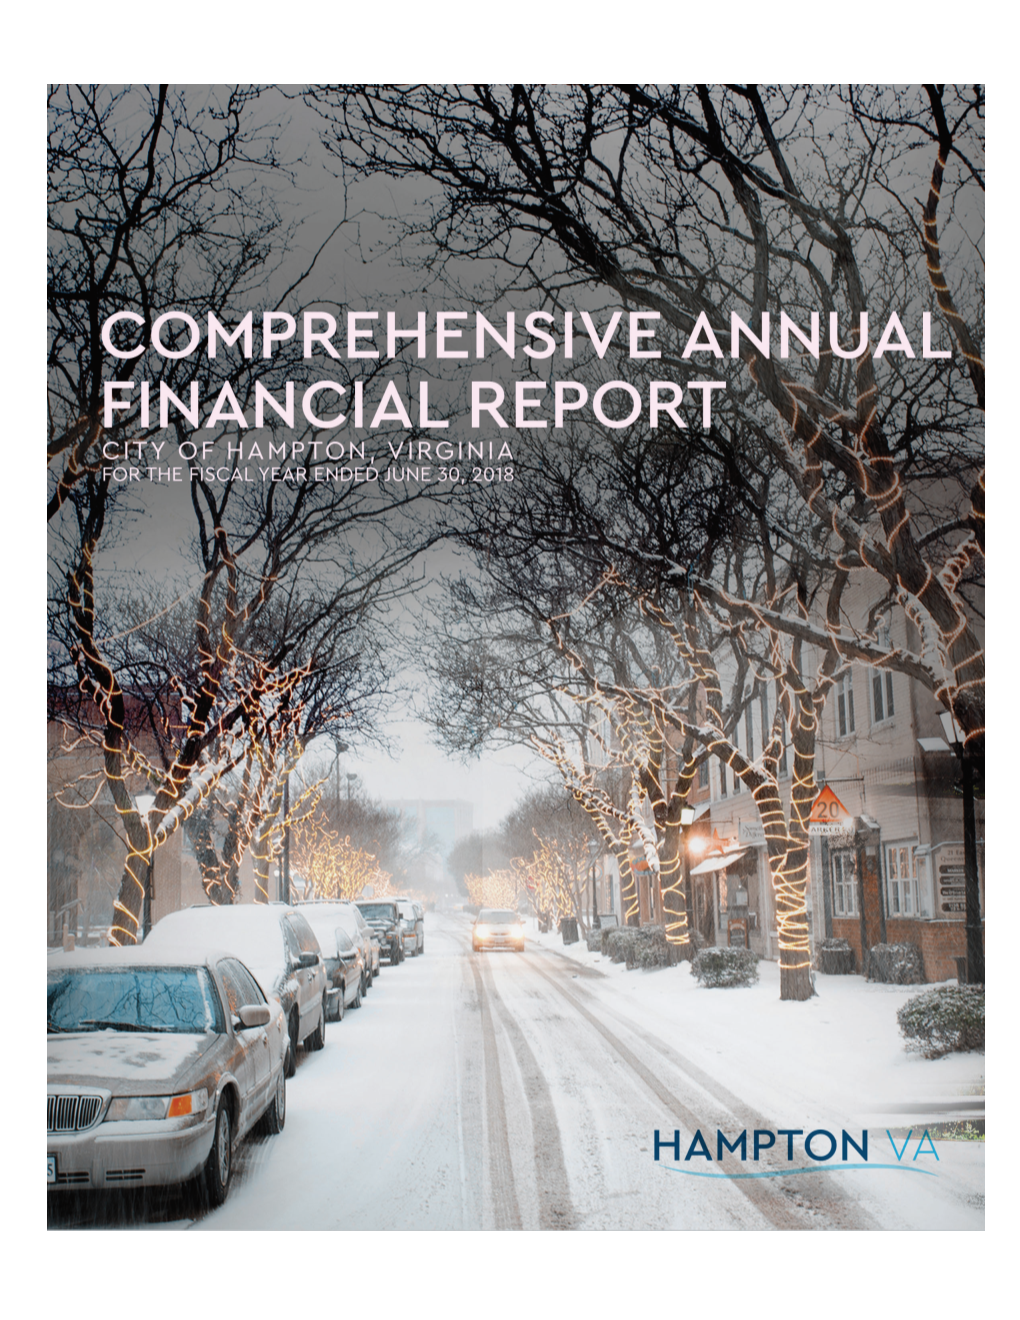 Comprehensive Annual Financial Report of the City of Hampton, Virginia